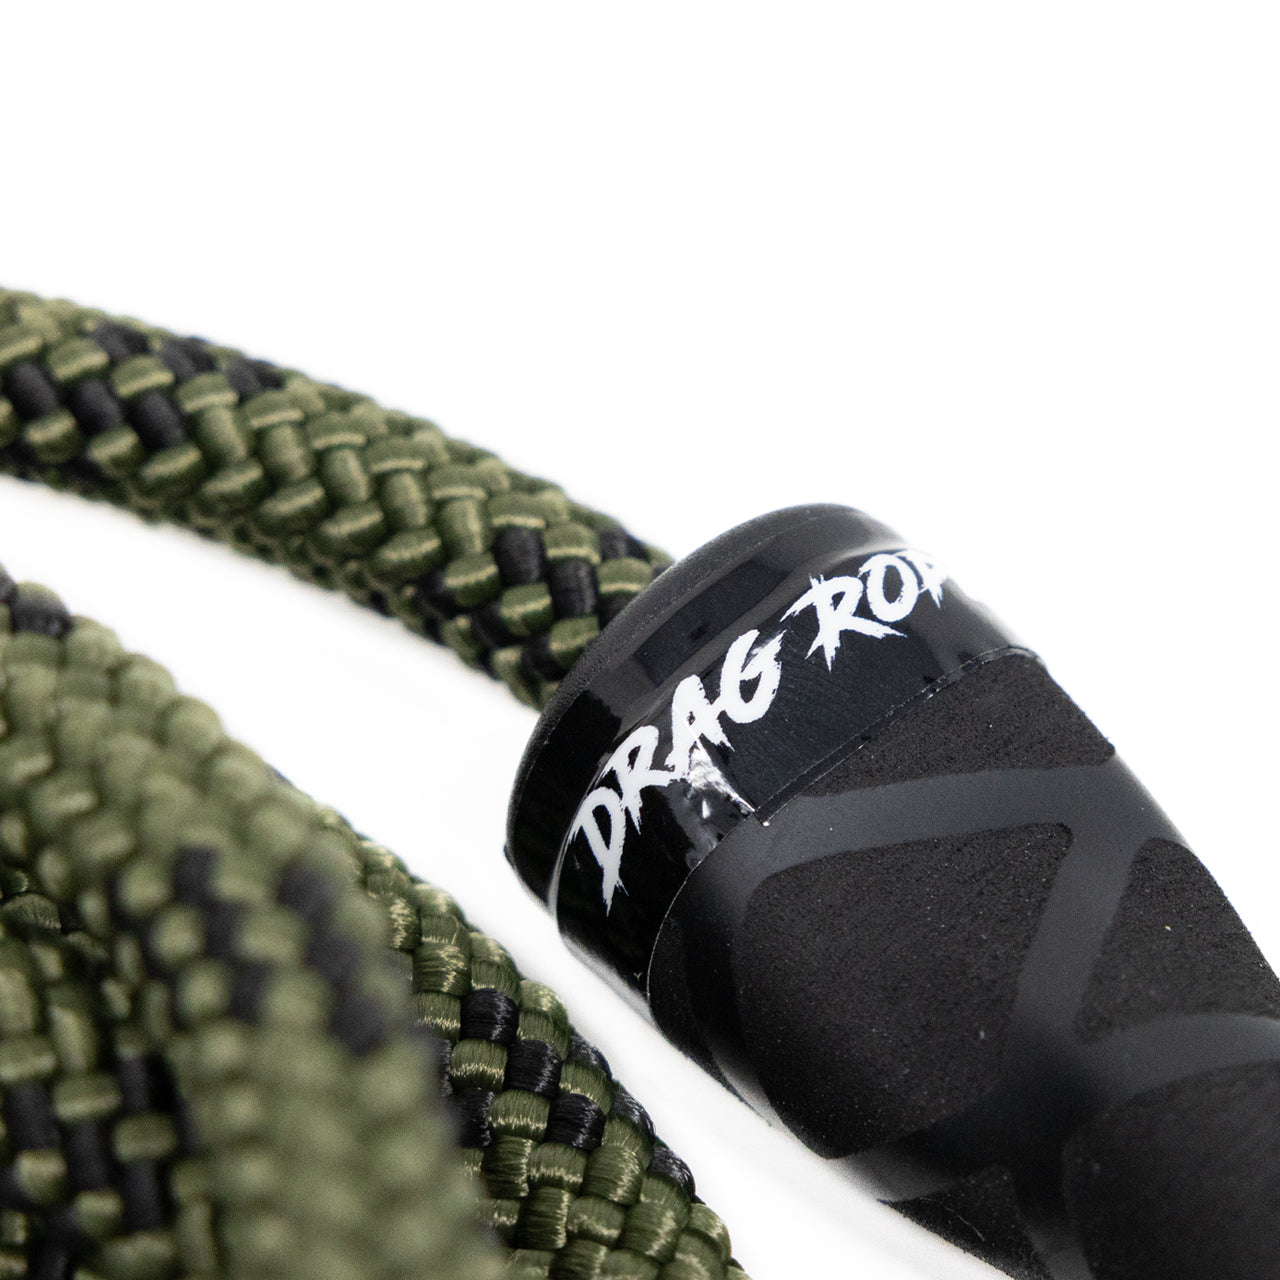 RXSG Drag Rope Camo handle upclose